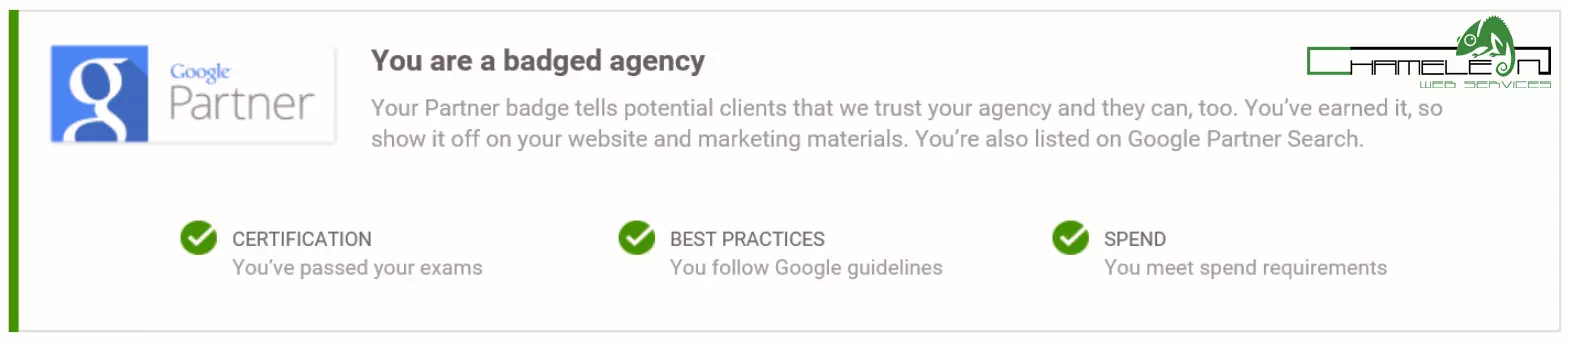 Google Partner Badged Agency